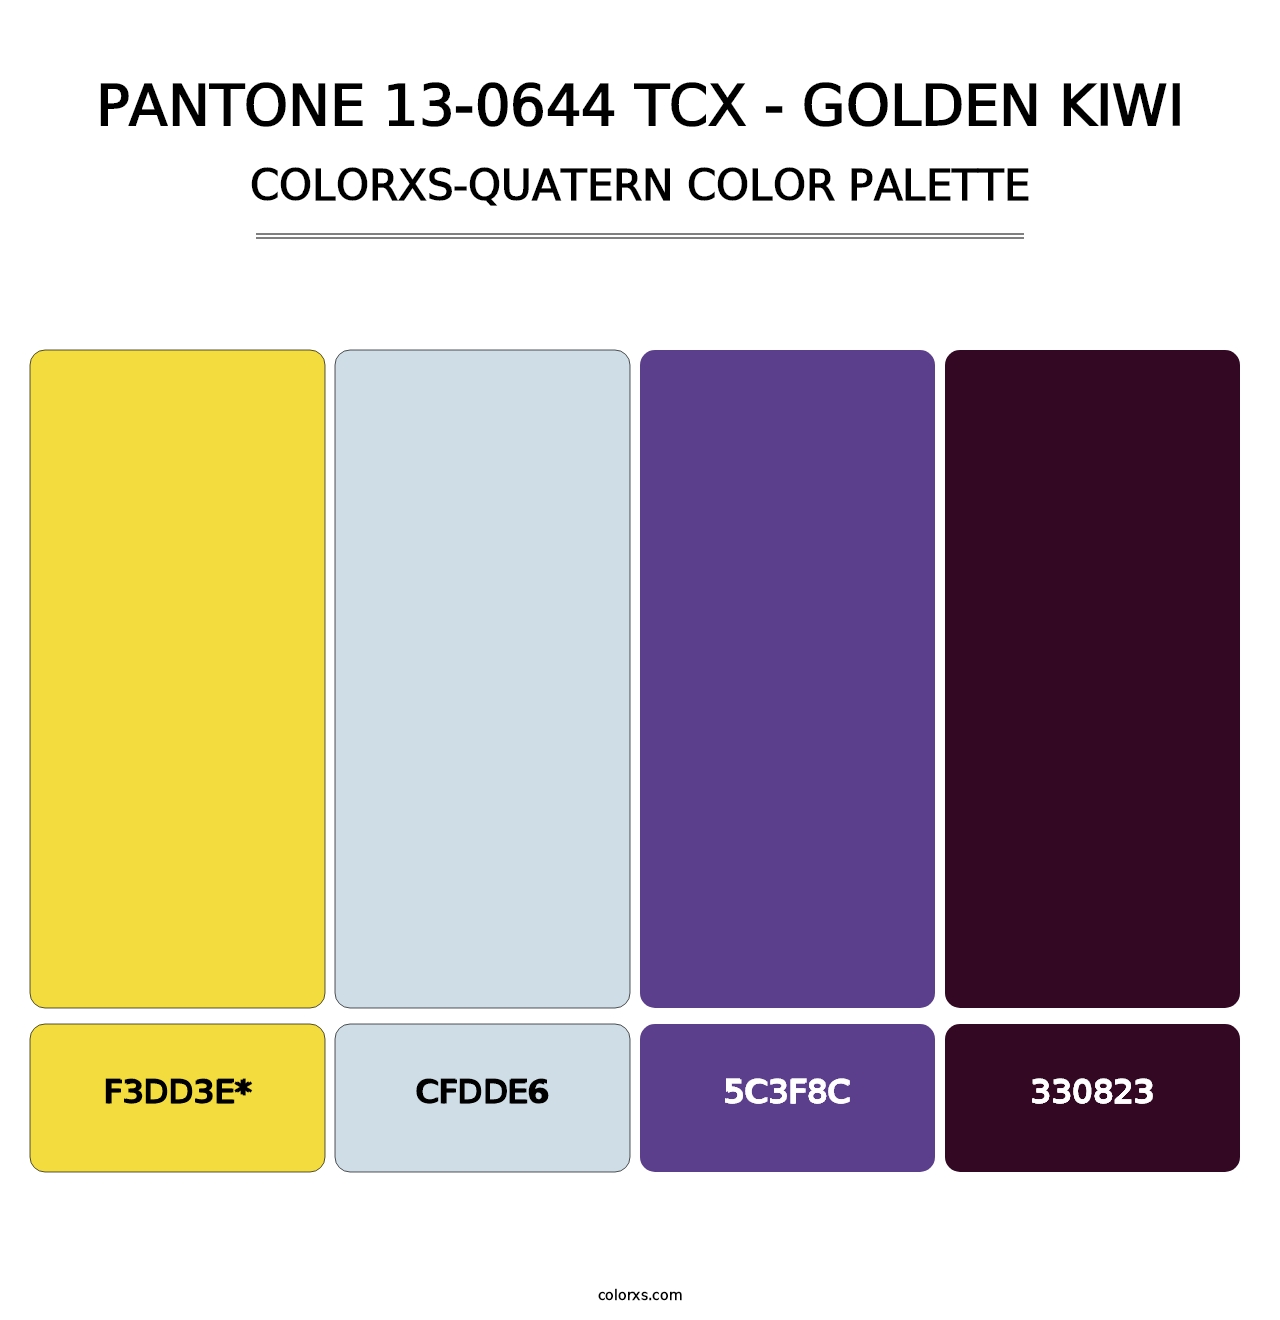 PANTONE 13-0644 TCX - Golden Kiwi - Colorxs Quatern Palette